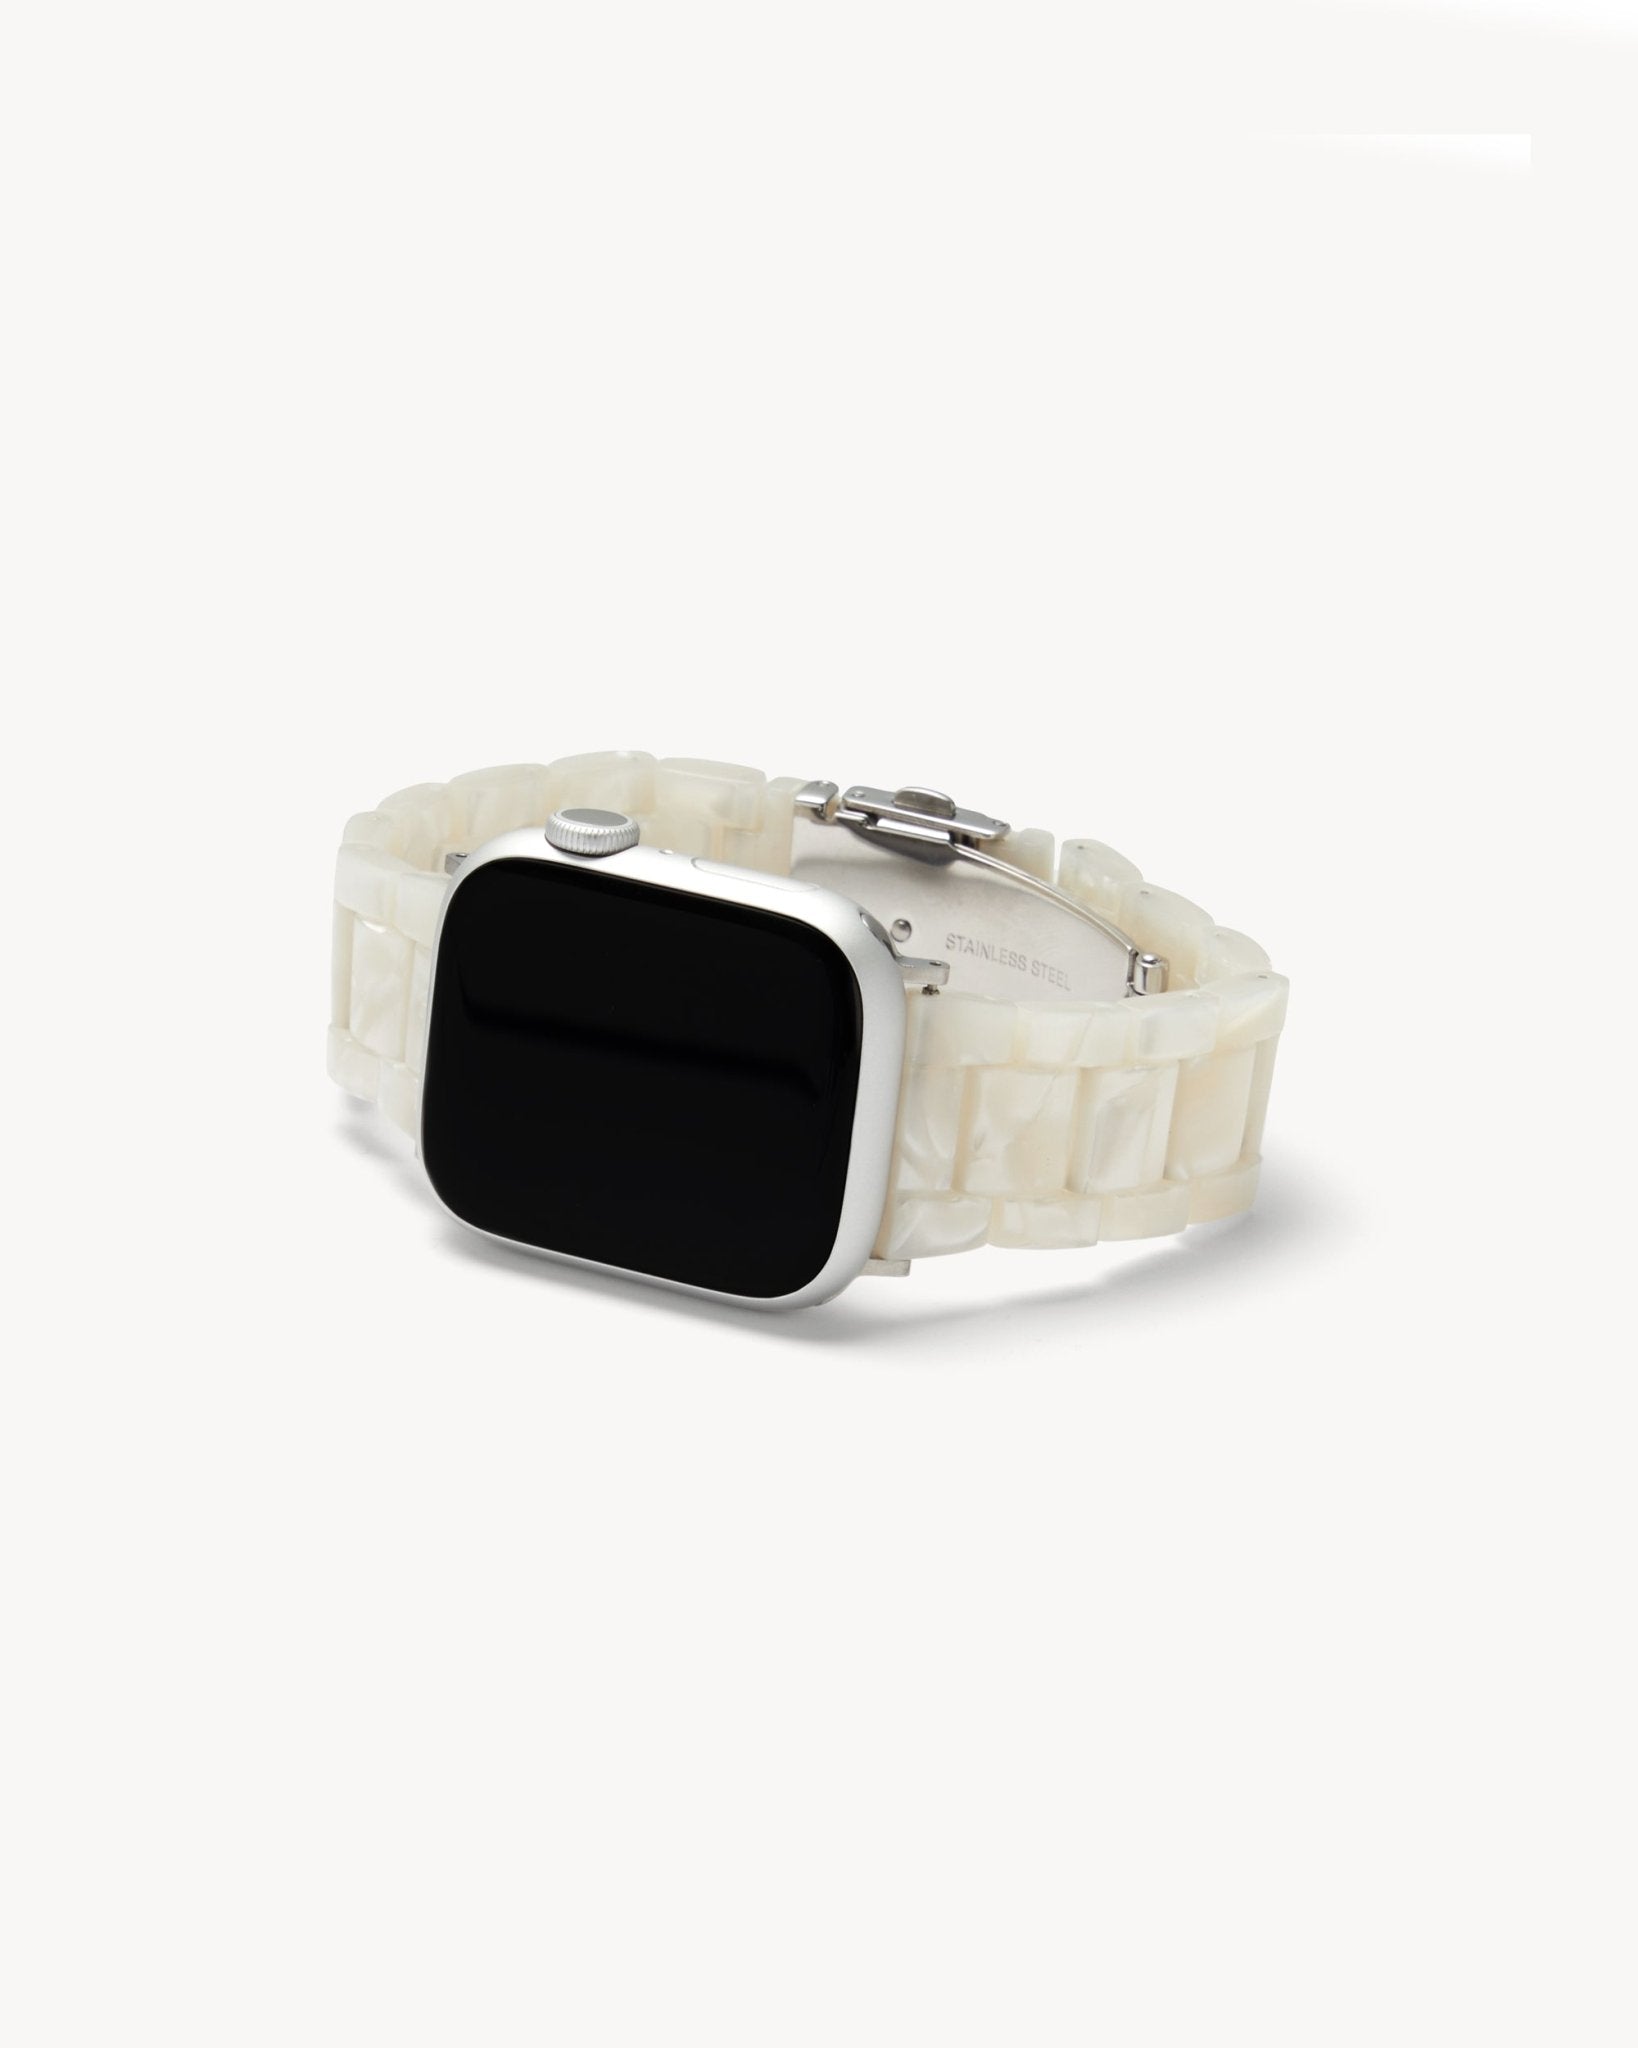 Apple Watch Band in White Shell - MACHETE